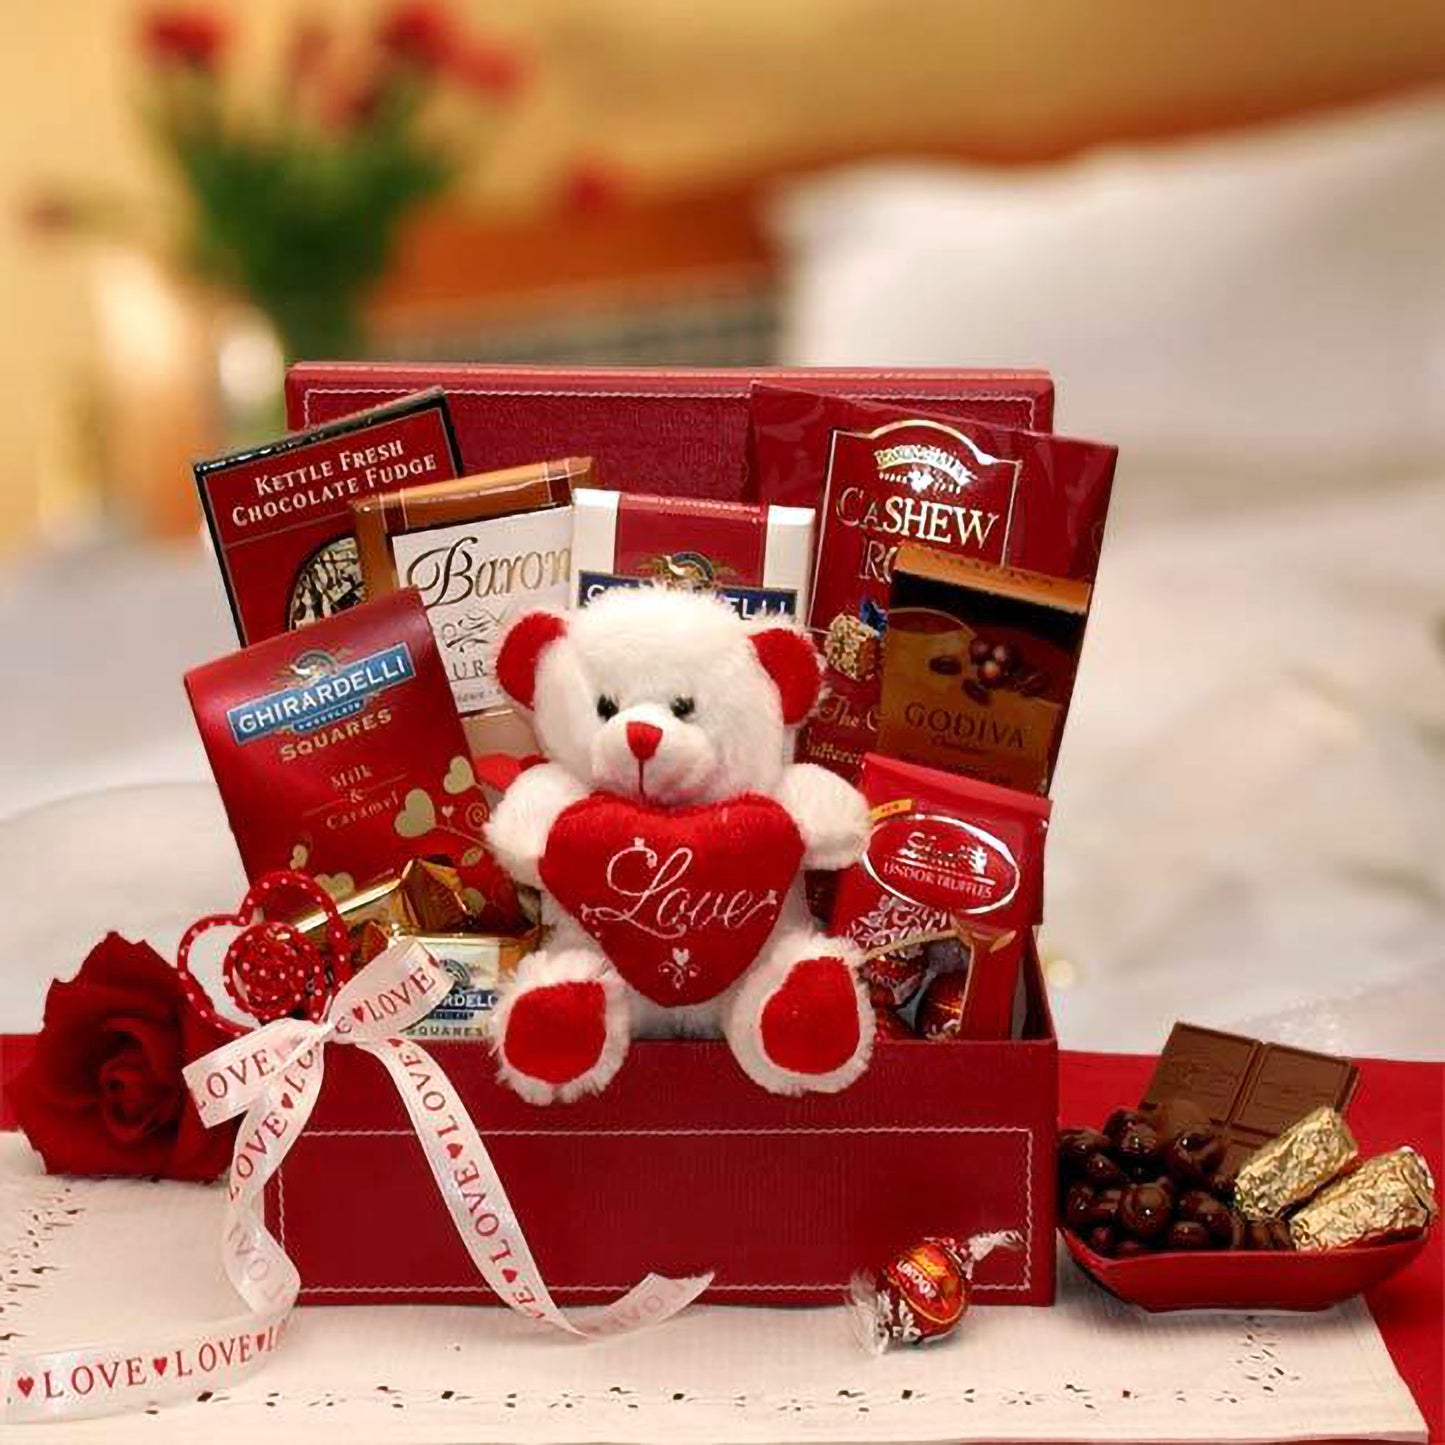 Be My Love Chocolate Valentine Gift Set